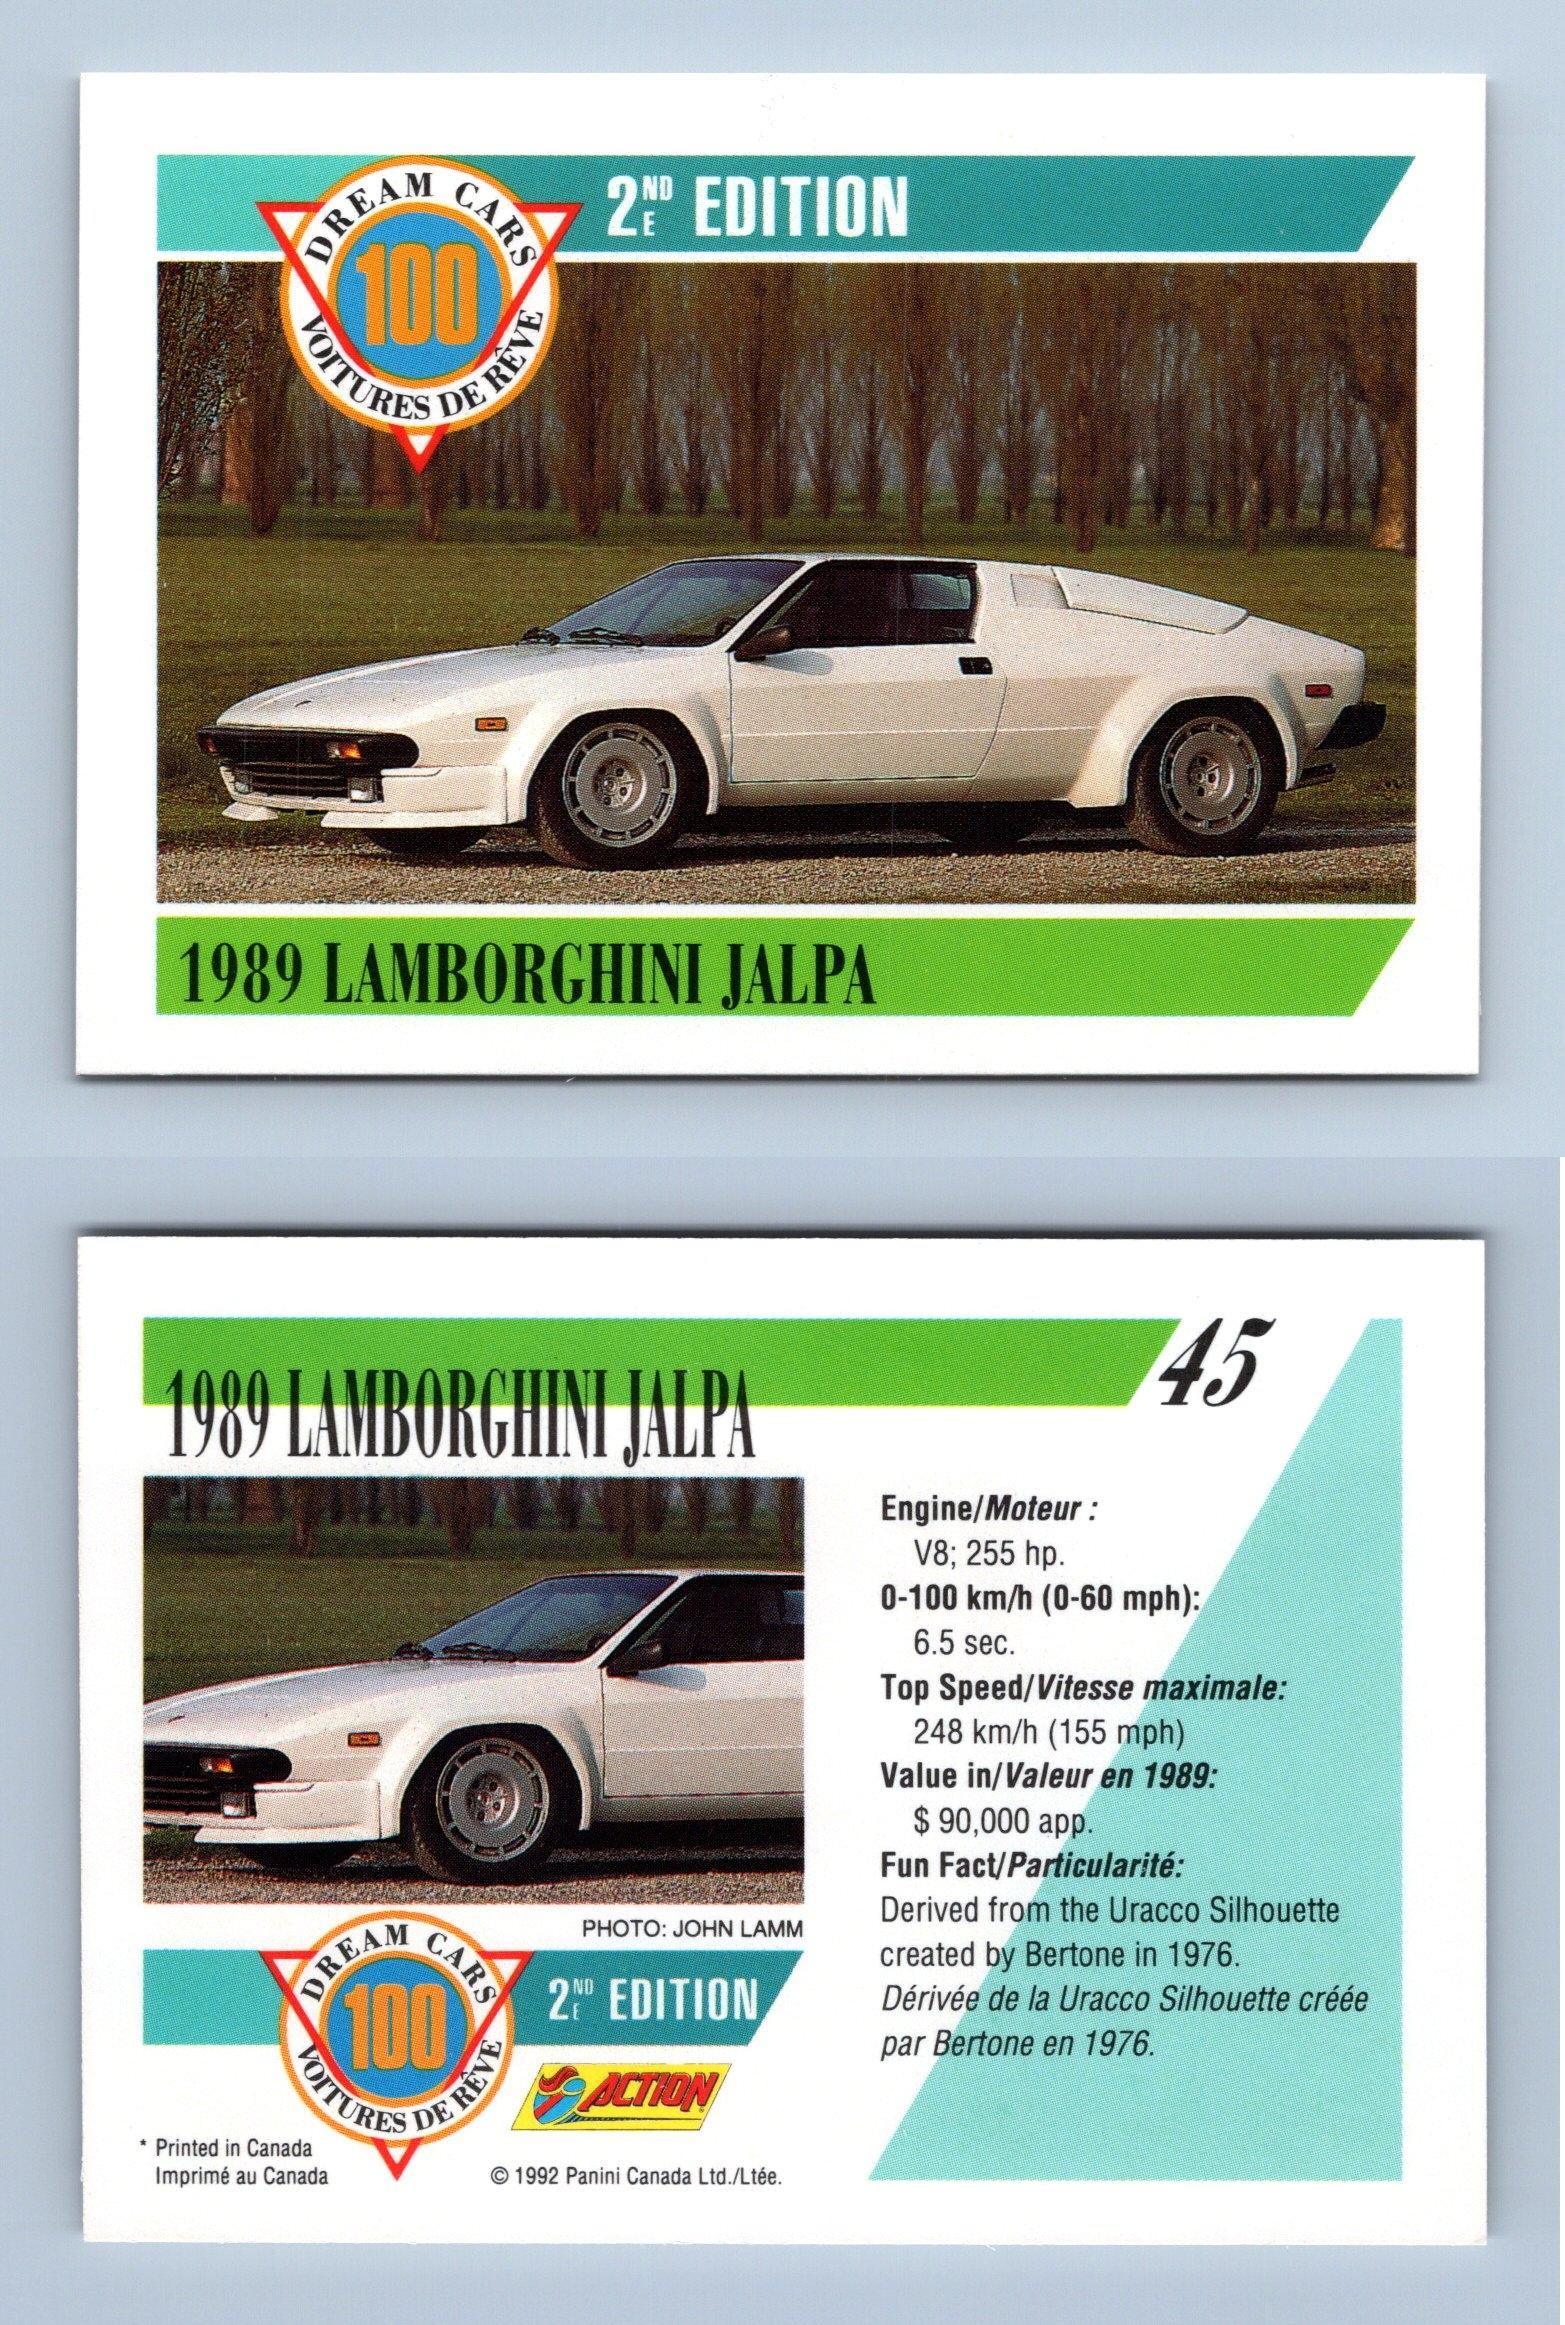 1989 Lamborghini Jalpa #45 - Dream Cars 2nd Edition 1992 Panini Trading Card